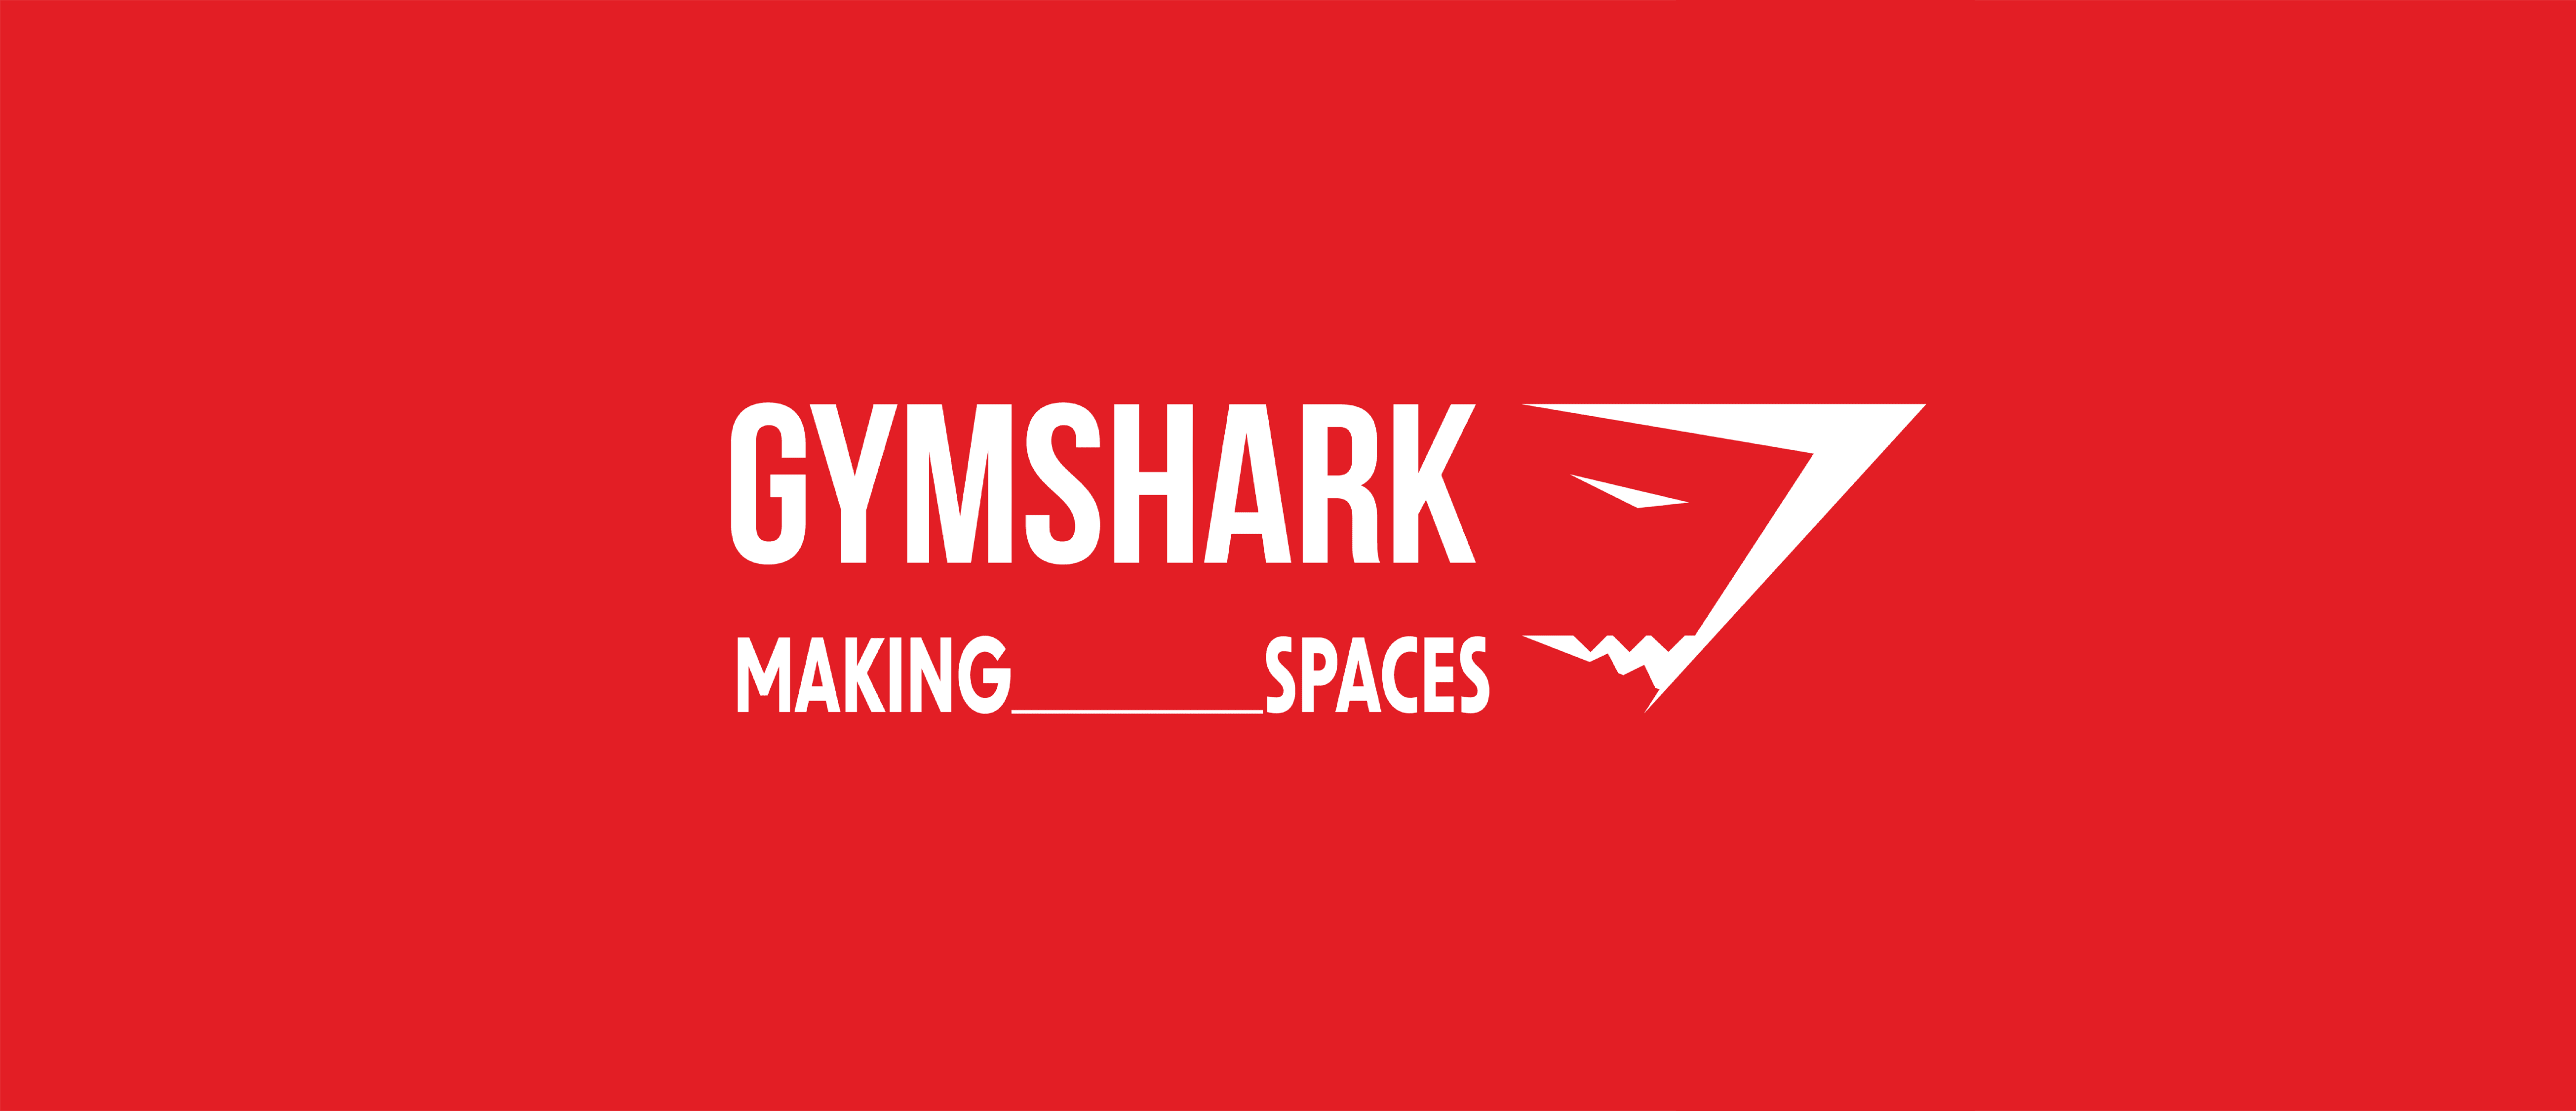 Gymshark – Making Spaces